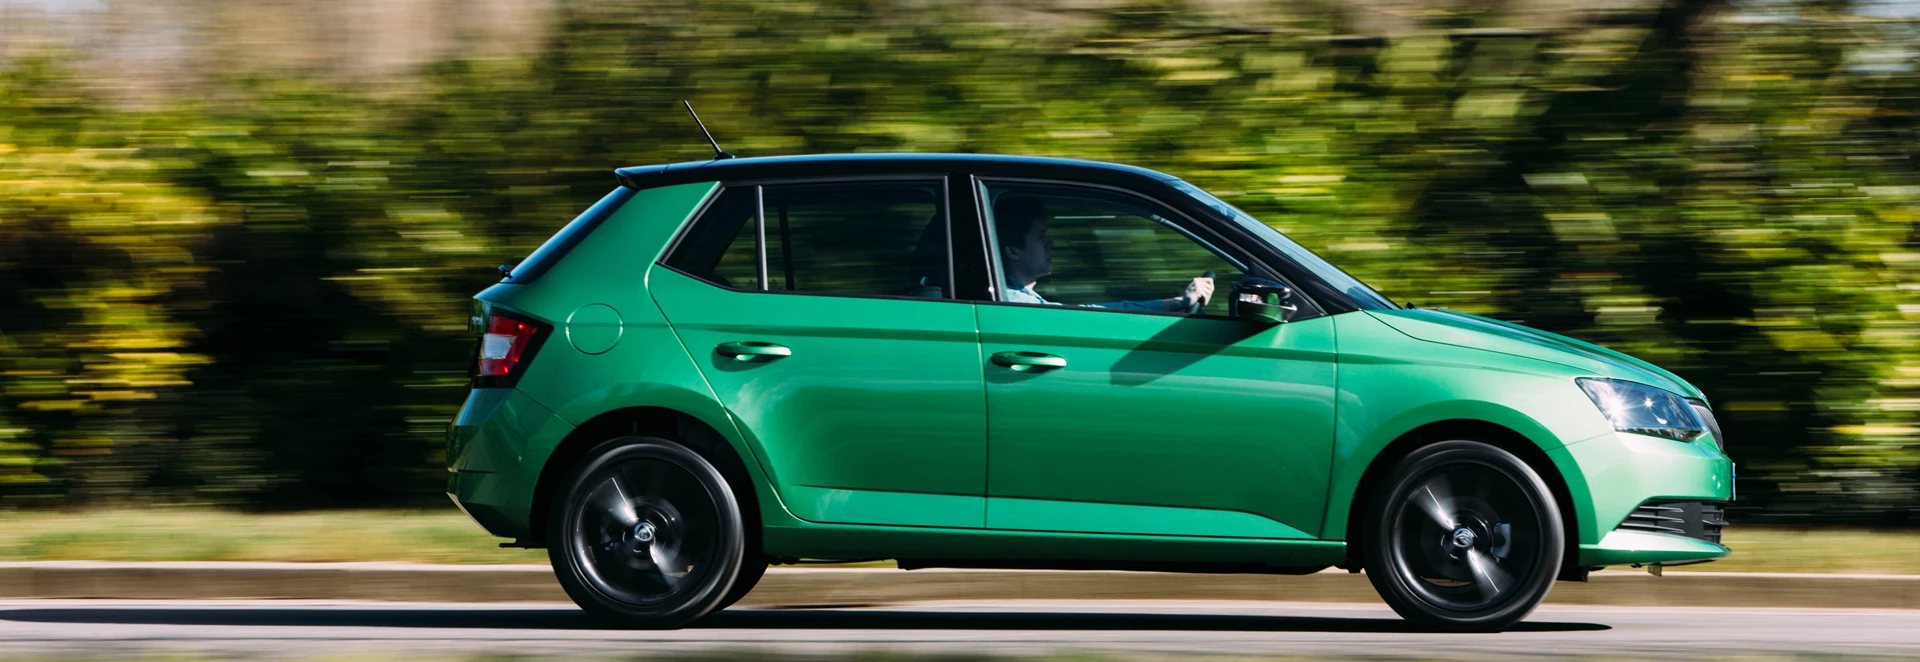 Skoda Fabia 1.2-litre Colour Edition hatchback review 